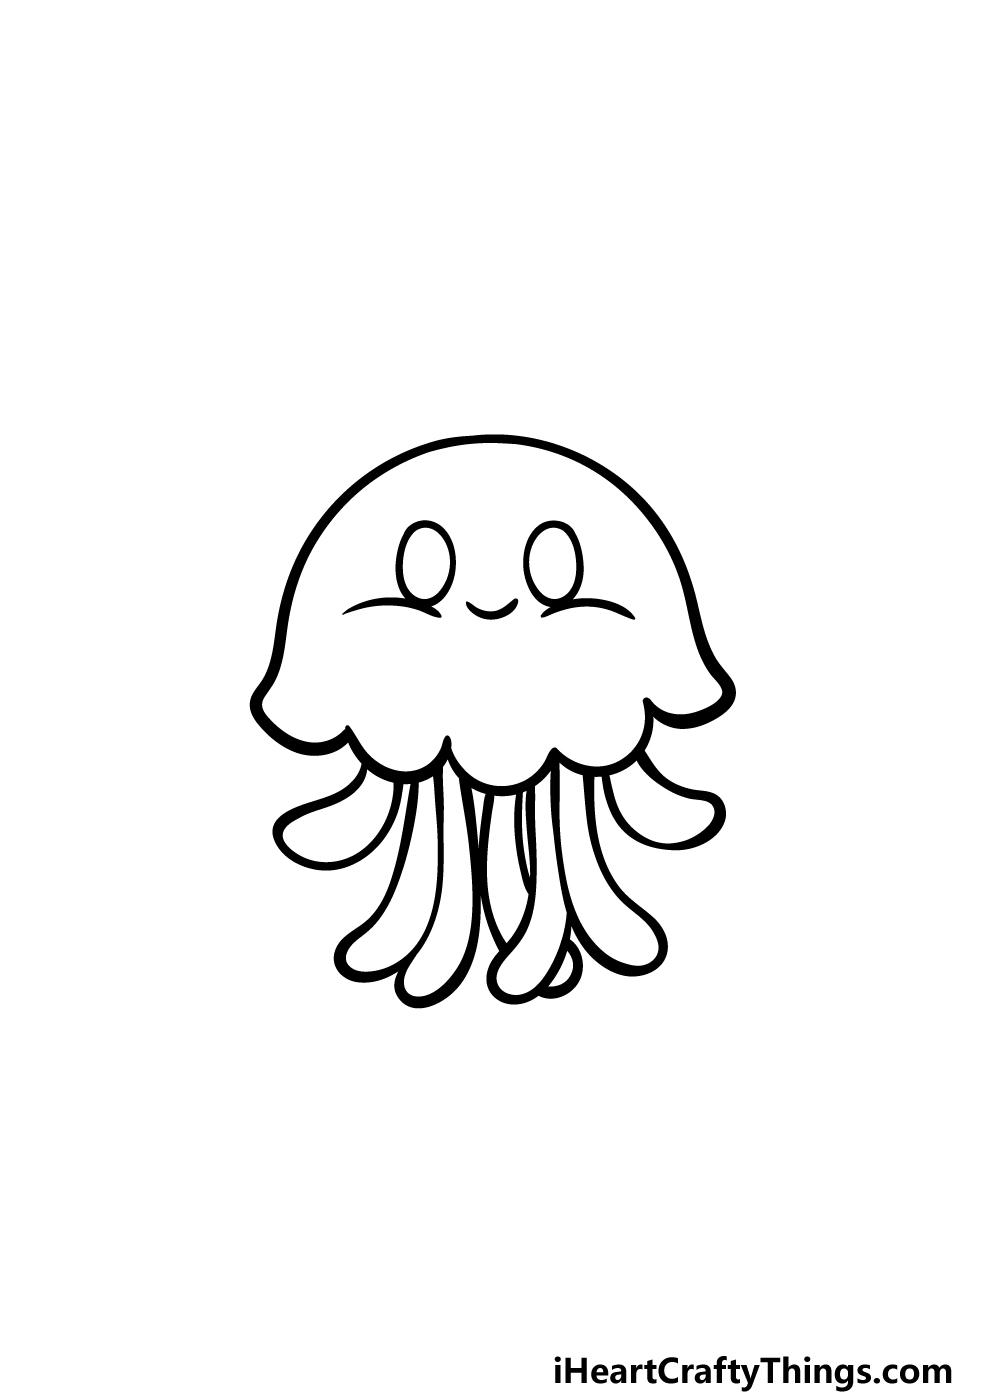 How to Draw A Cartoon Jellyfish step 5